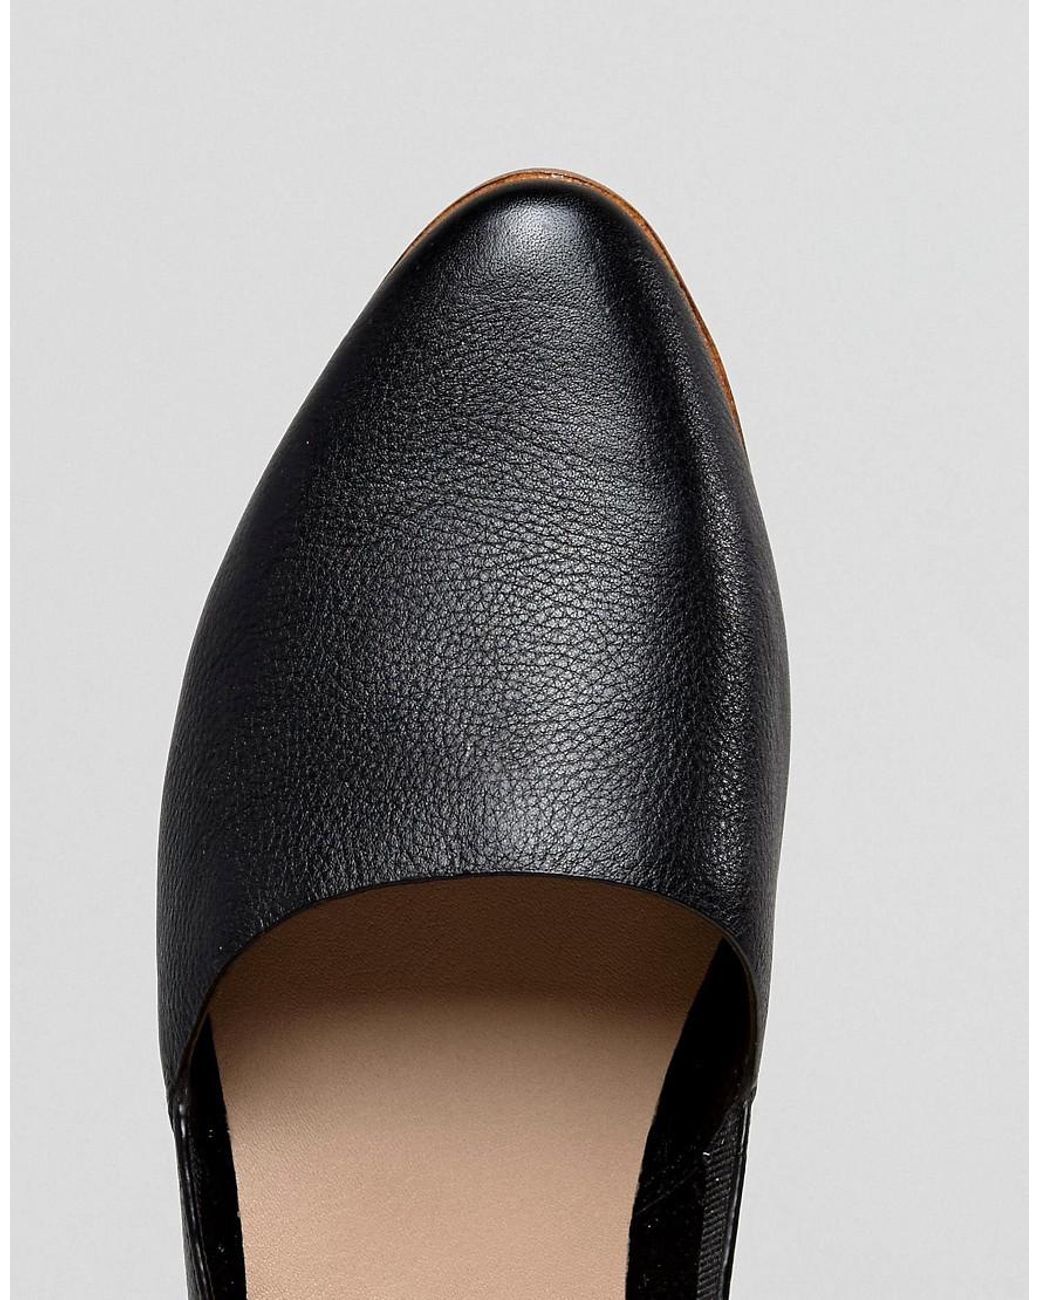 ALDO Blanchette Leather Flat Shoes in Black | Lyst